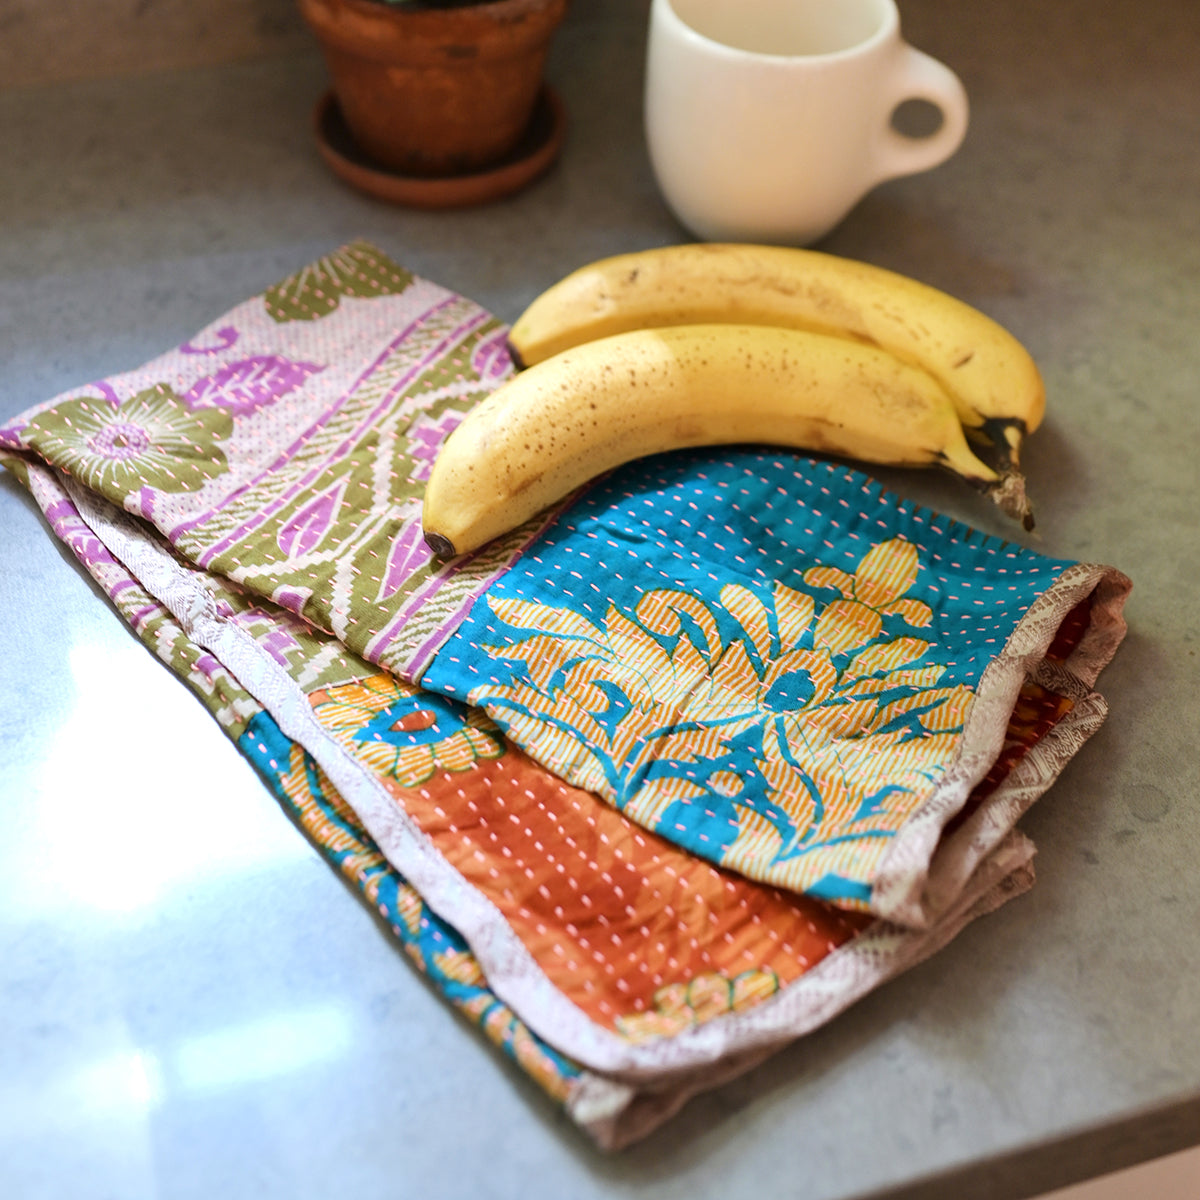 A banana rests on a Sari Home Tea Towel.